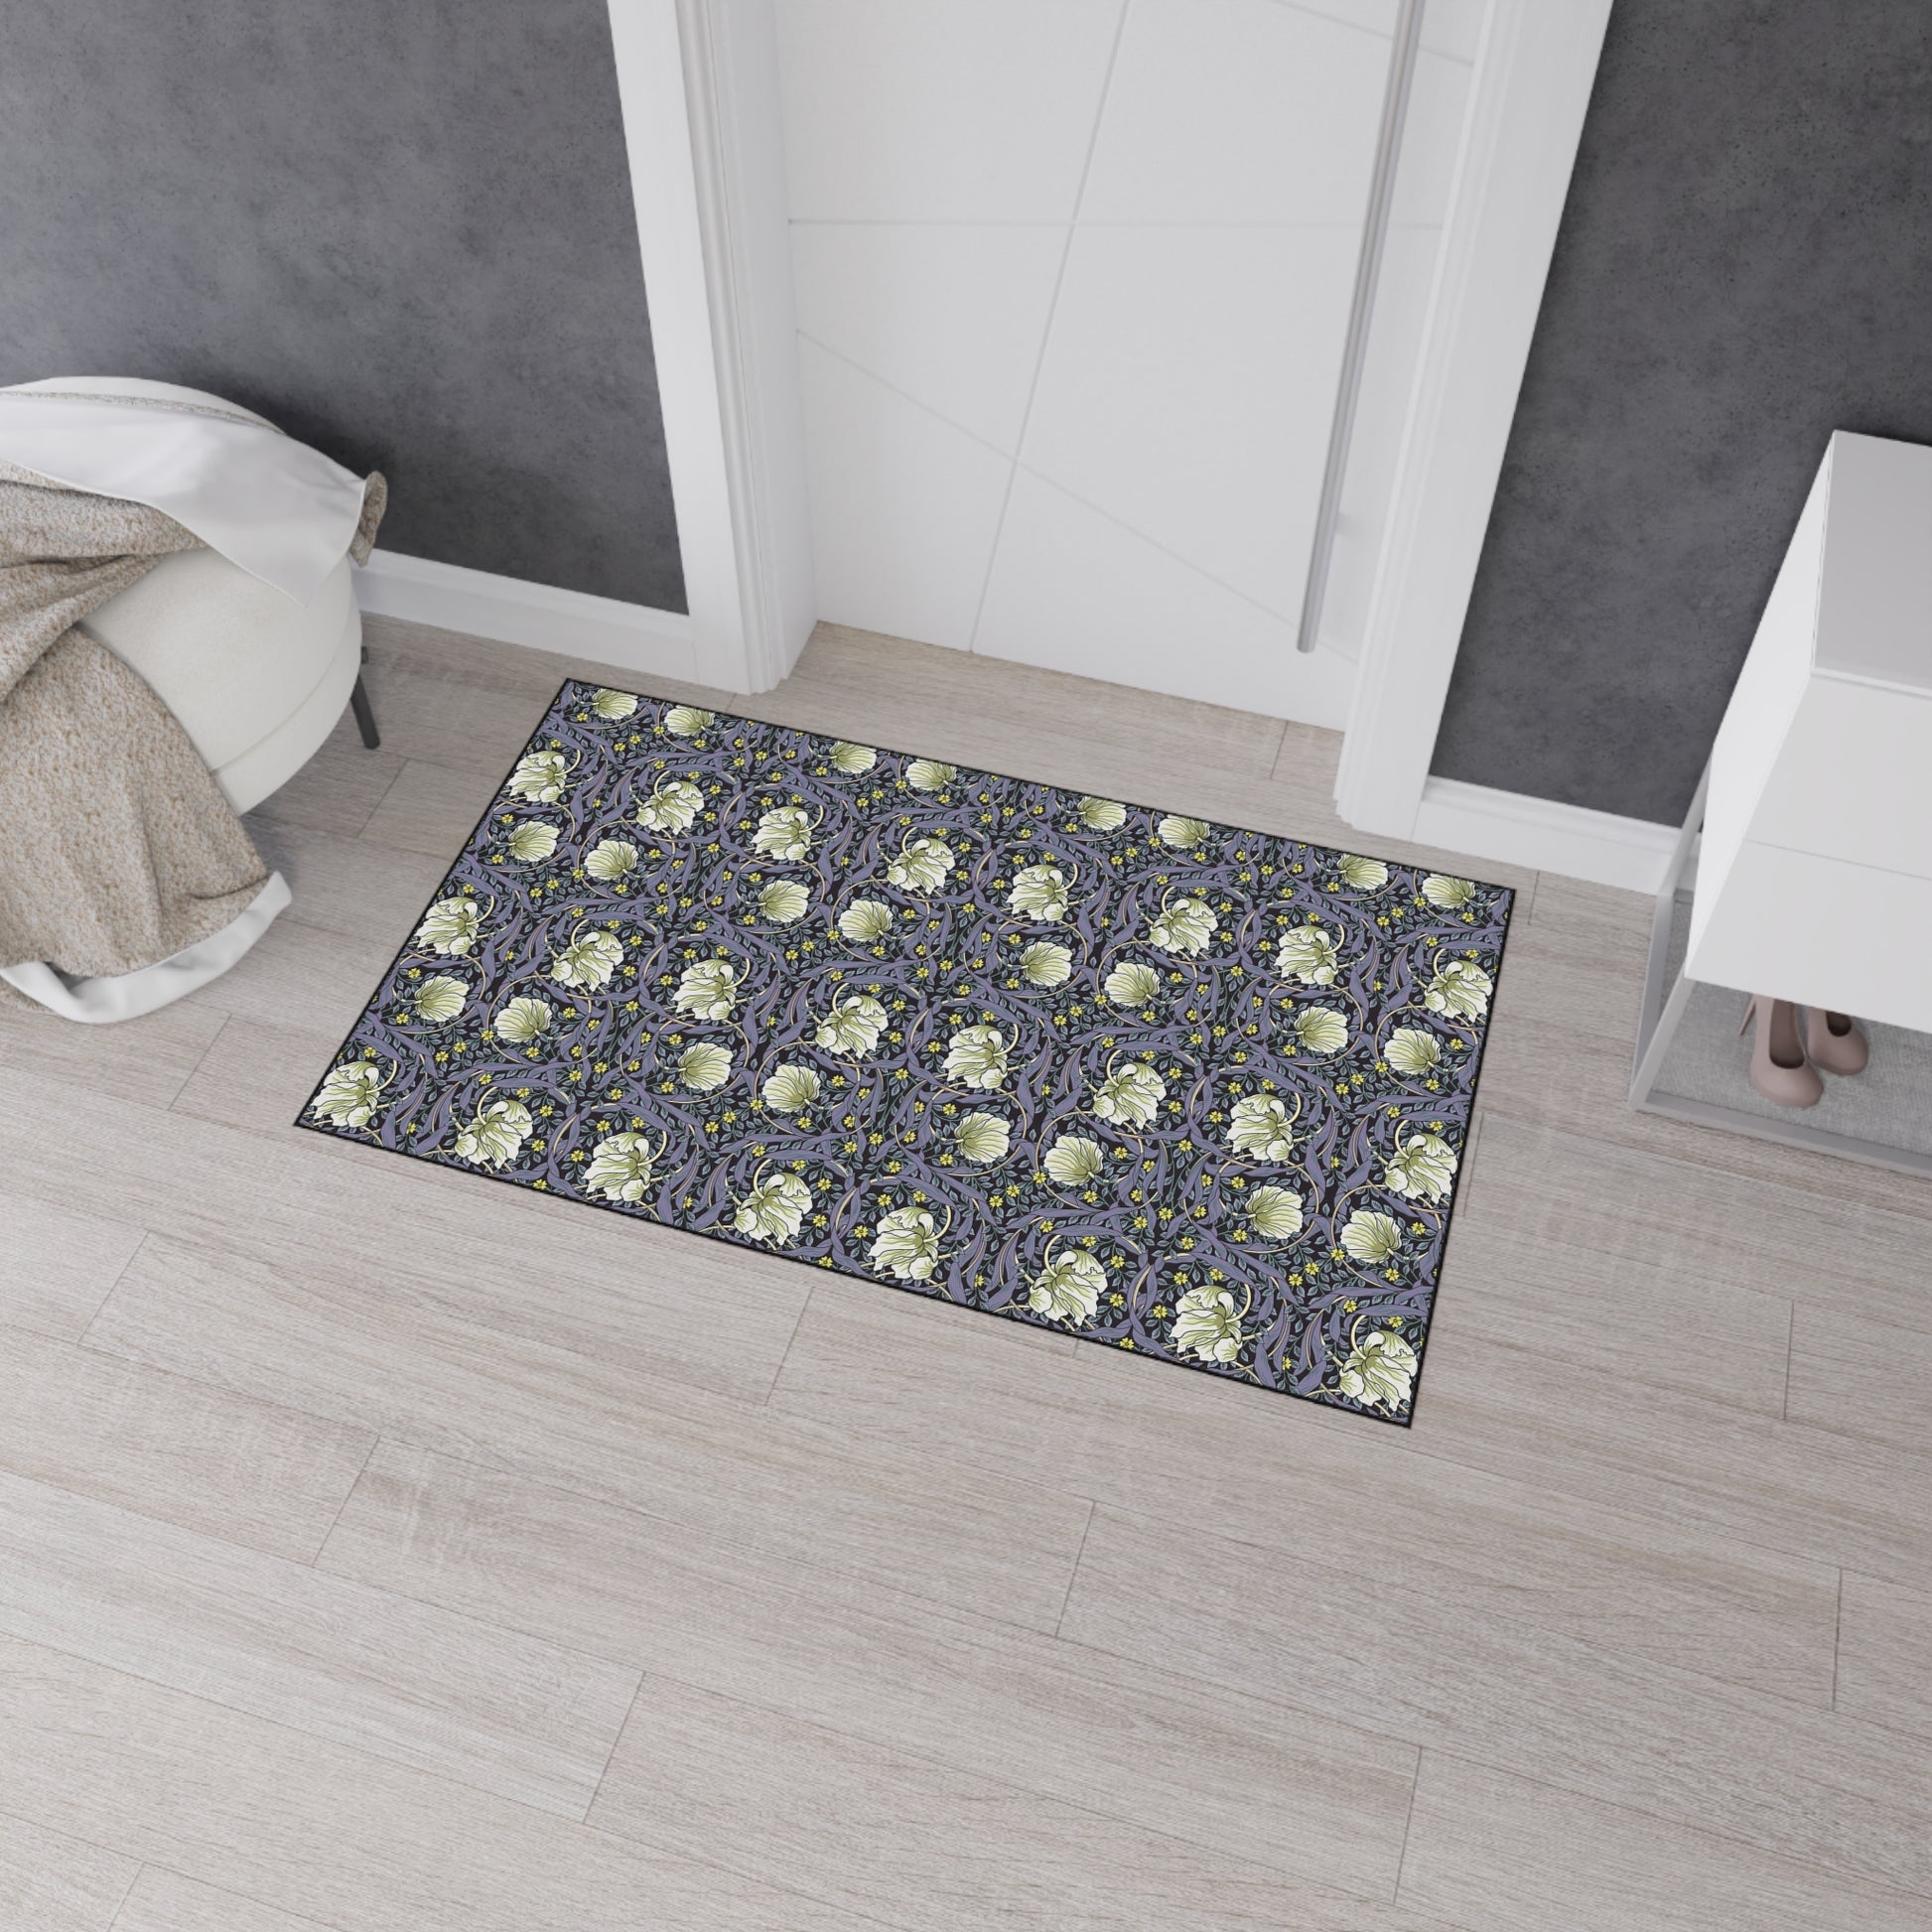 william-morris-co-heavy-duty-floor-mat-floor-mat-pimpernel-collection-lavender-17